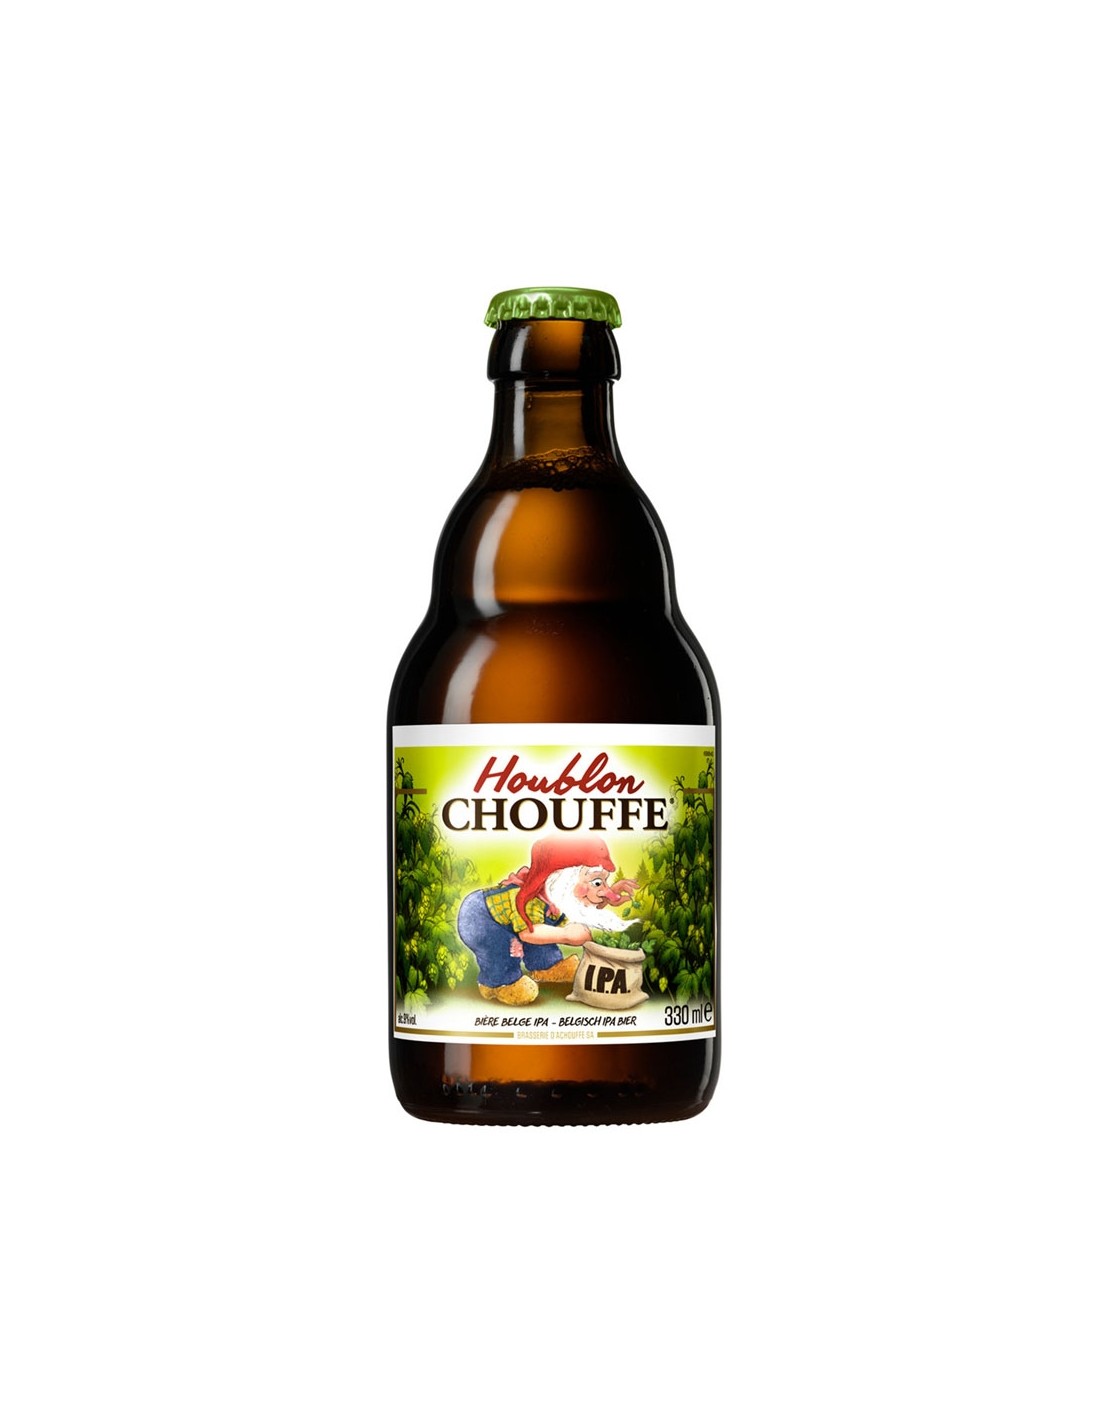 Bere blonda, nefiltrata Chouffe Houblon, 9% alc., 0.33L, Belgia alcooldiscount.ro